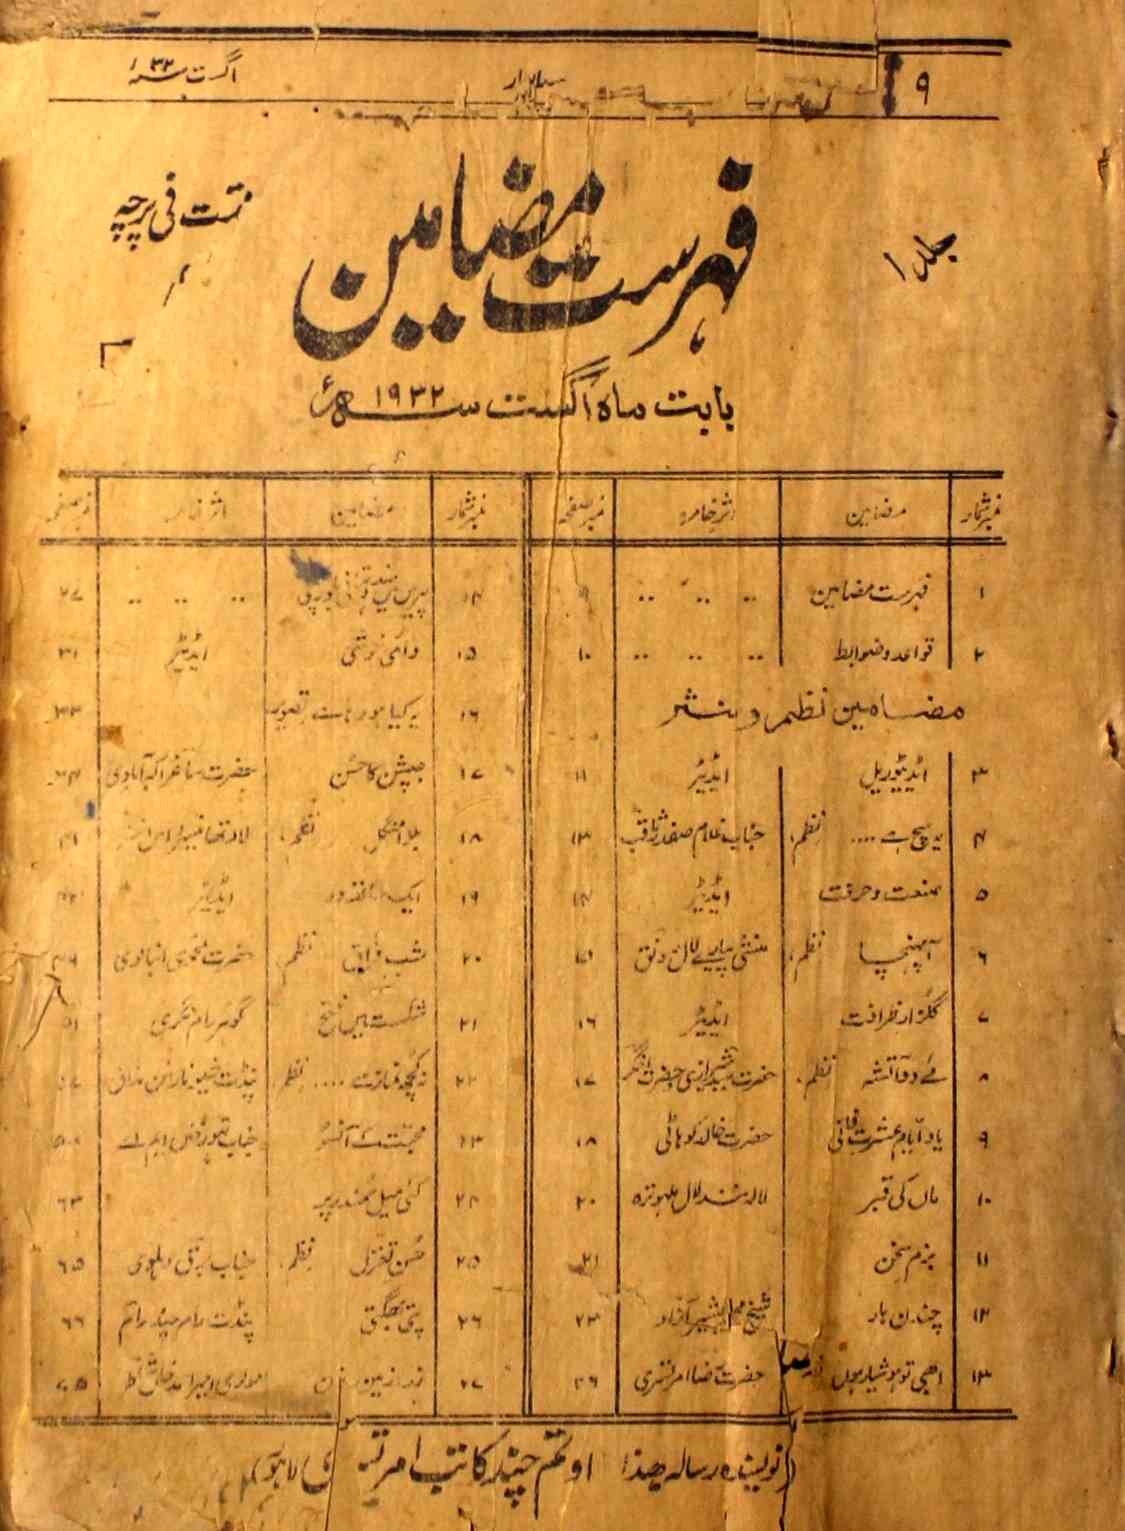 Sada Bahar Jild 1 August 1932-Svk-Shumara Number-000